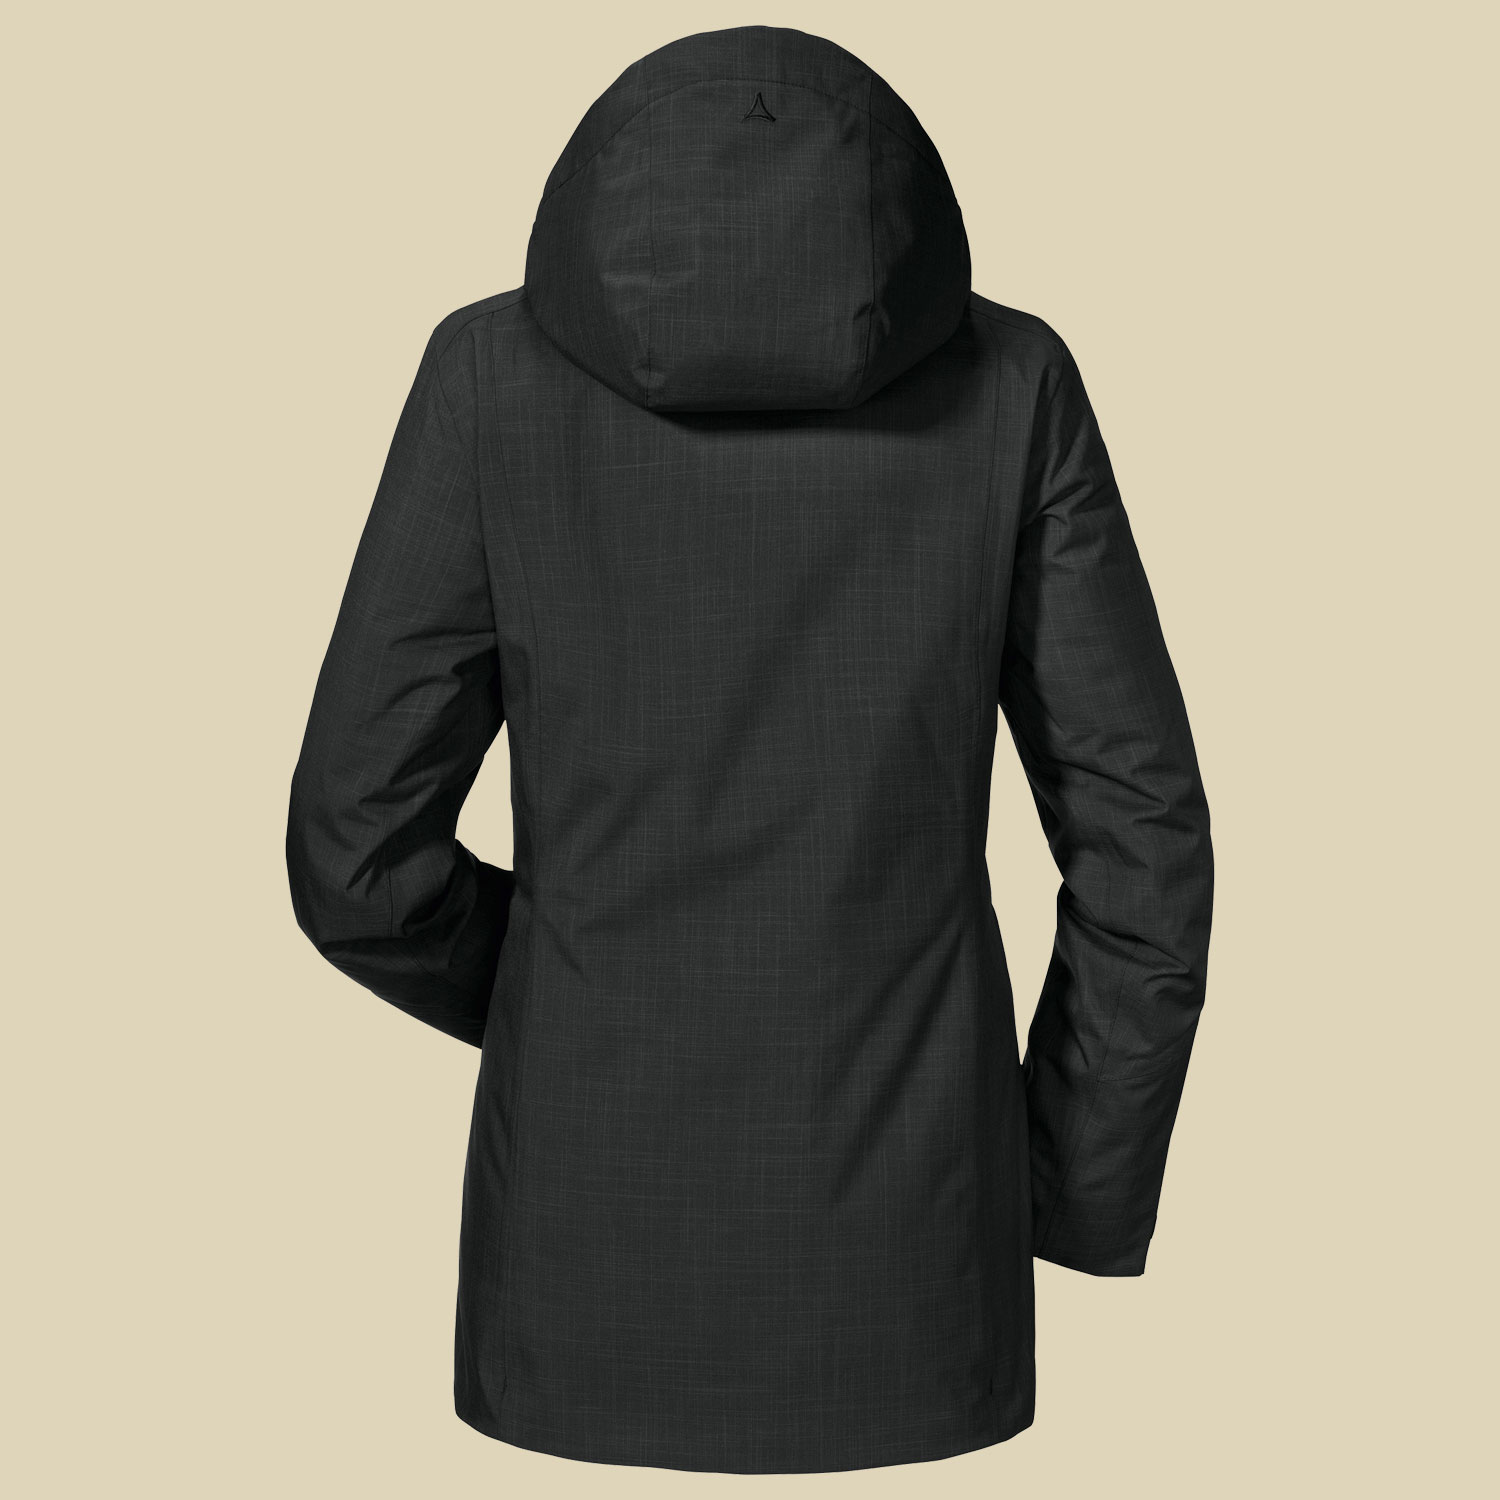 Insulated Jacket Sedona2 Women